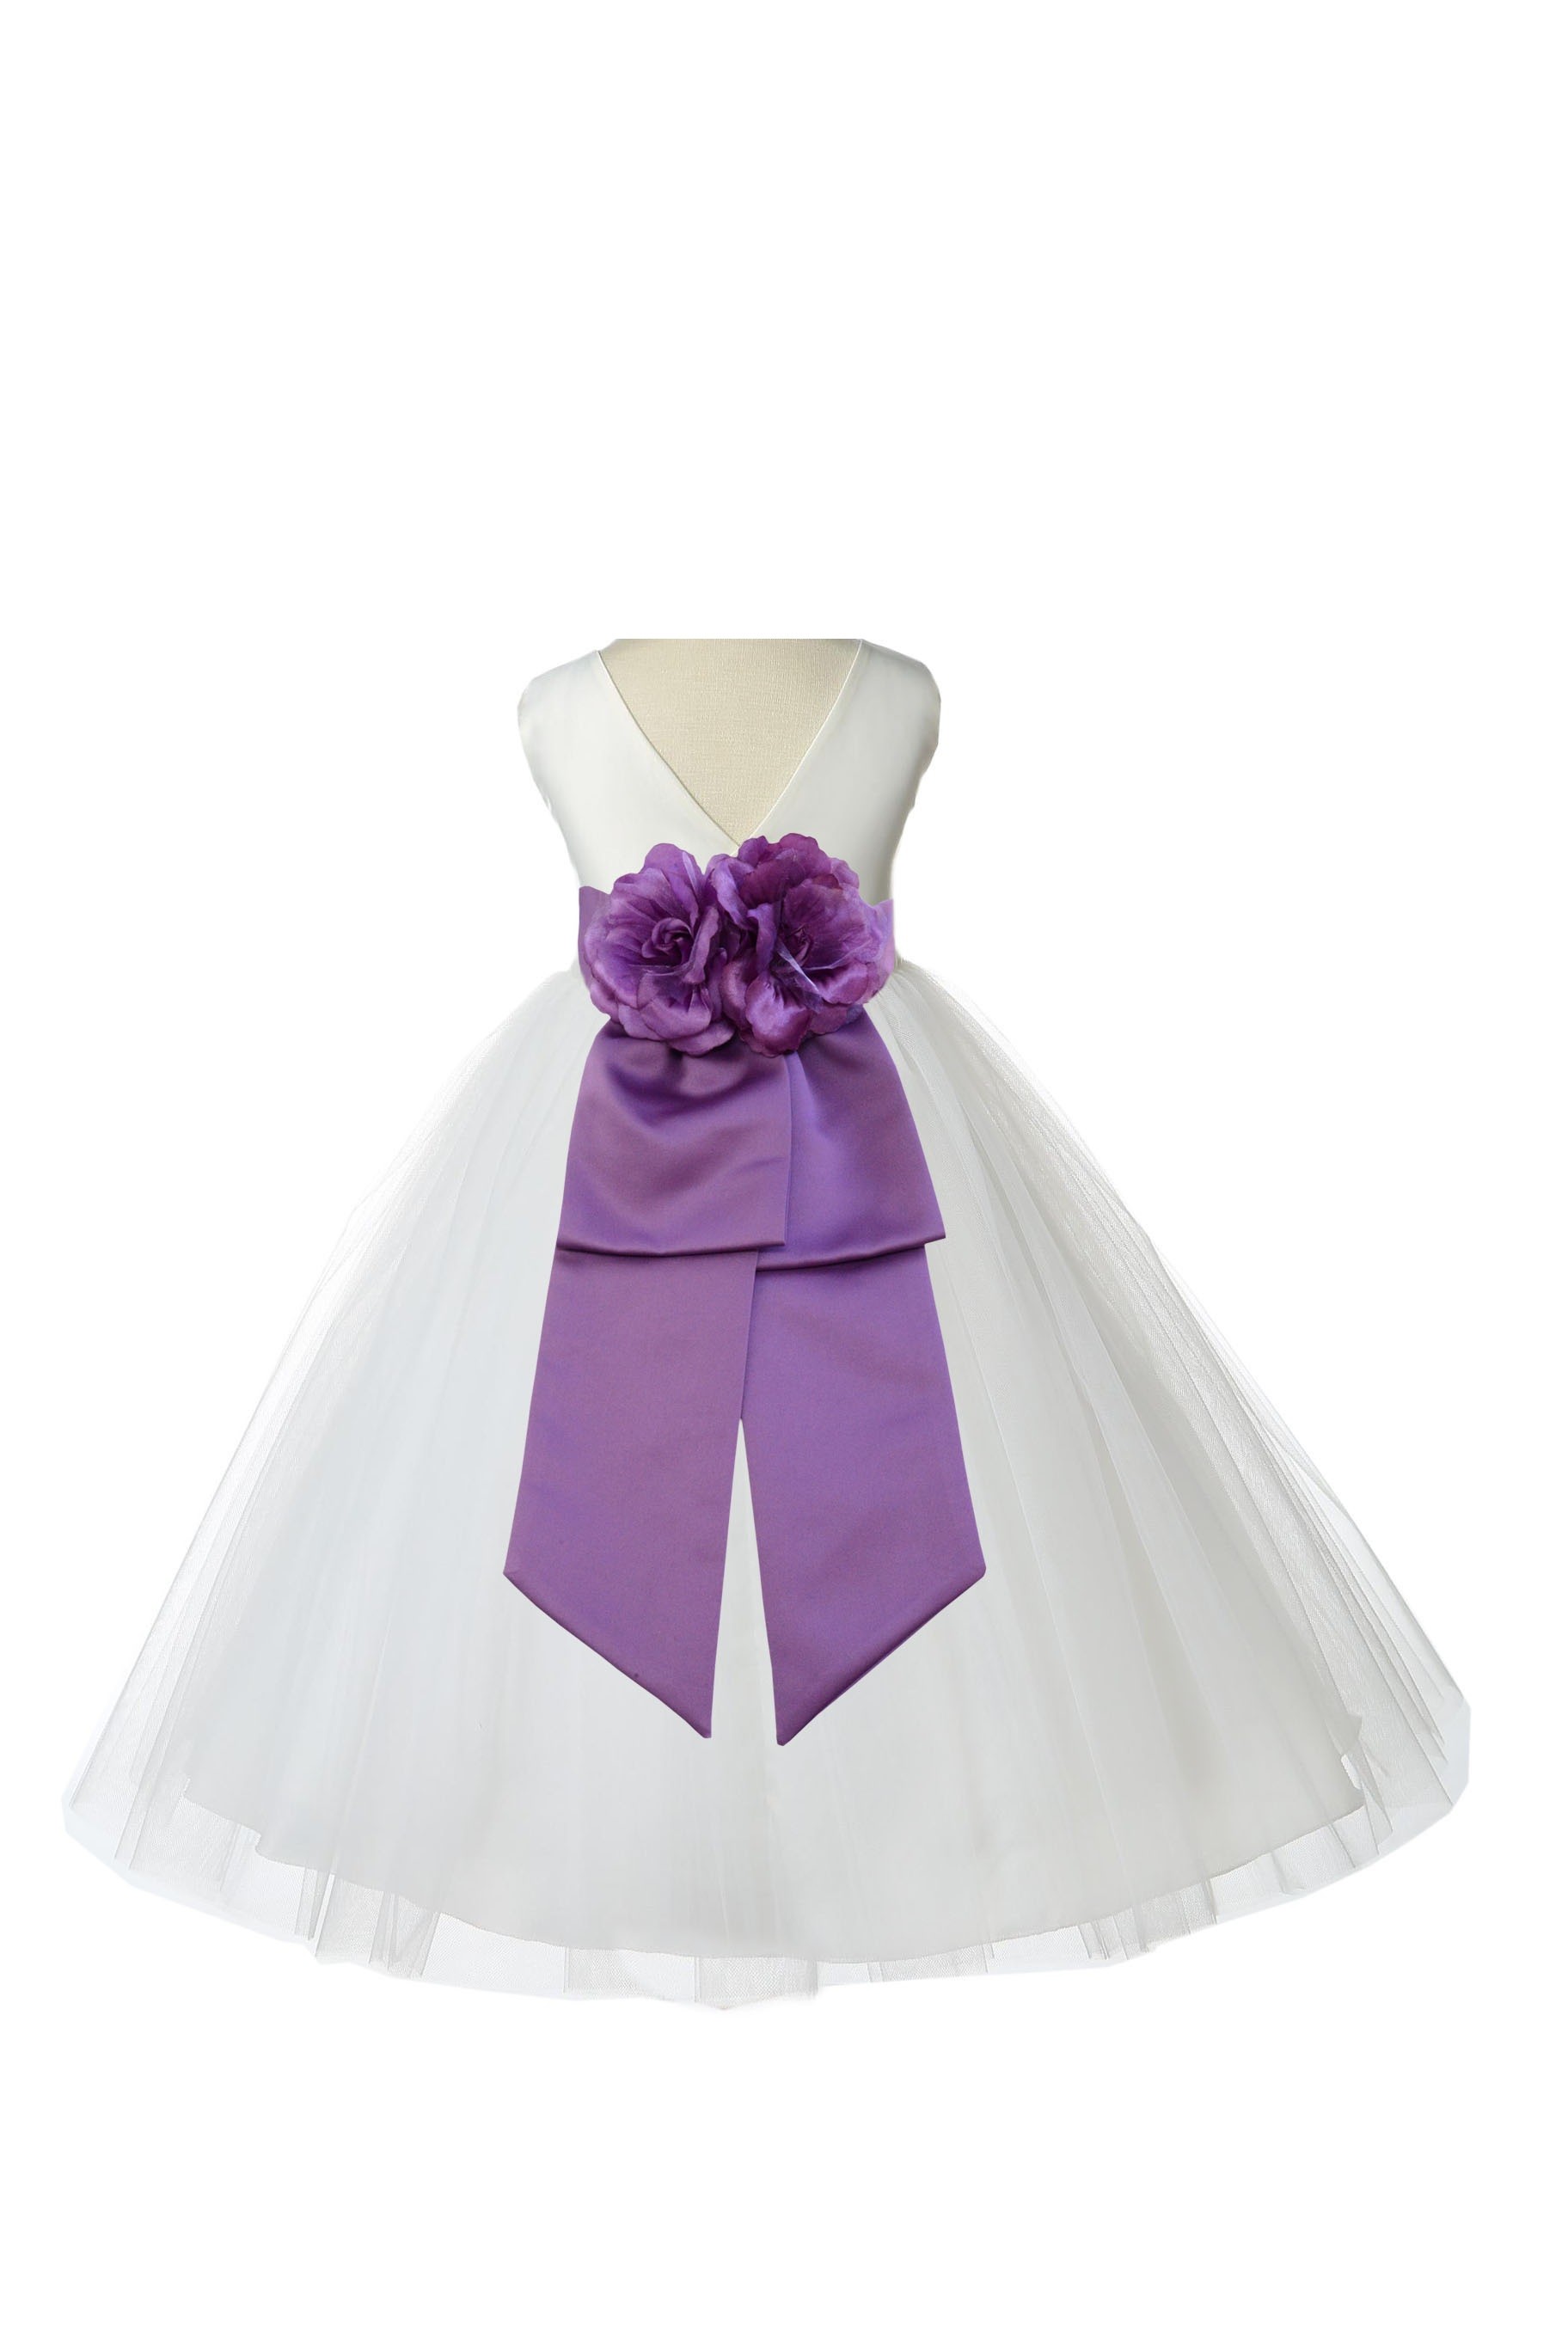 V-Neck Tulle Ivory/Wisteria Flower Girl Dress Wedding Pageant 108